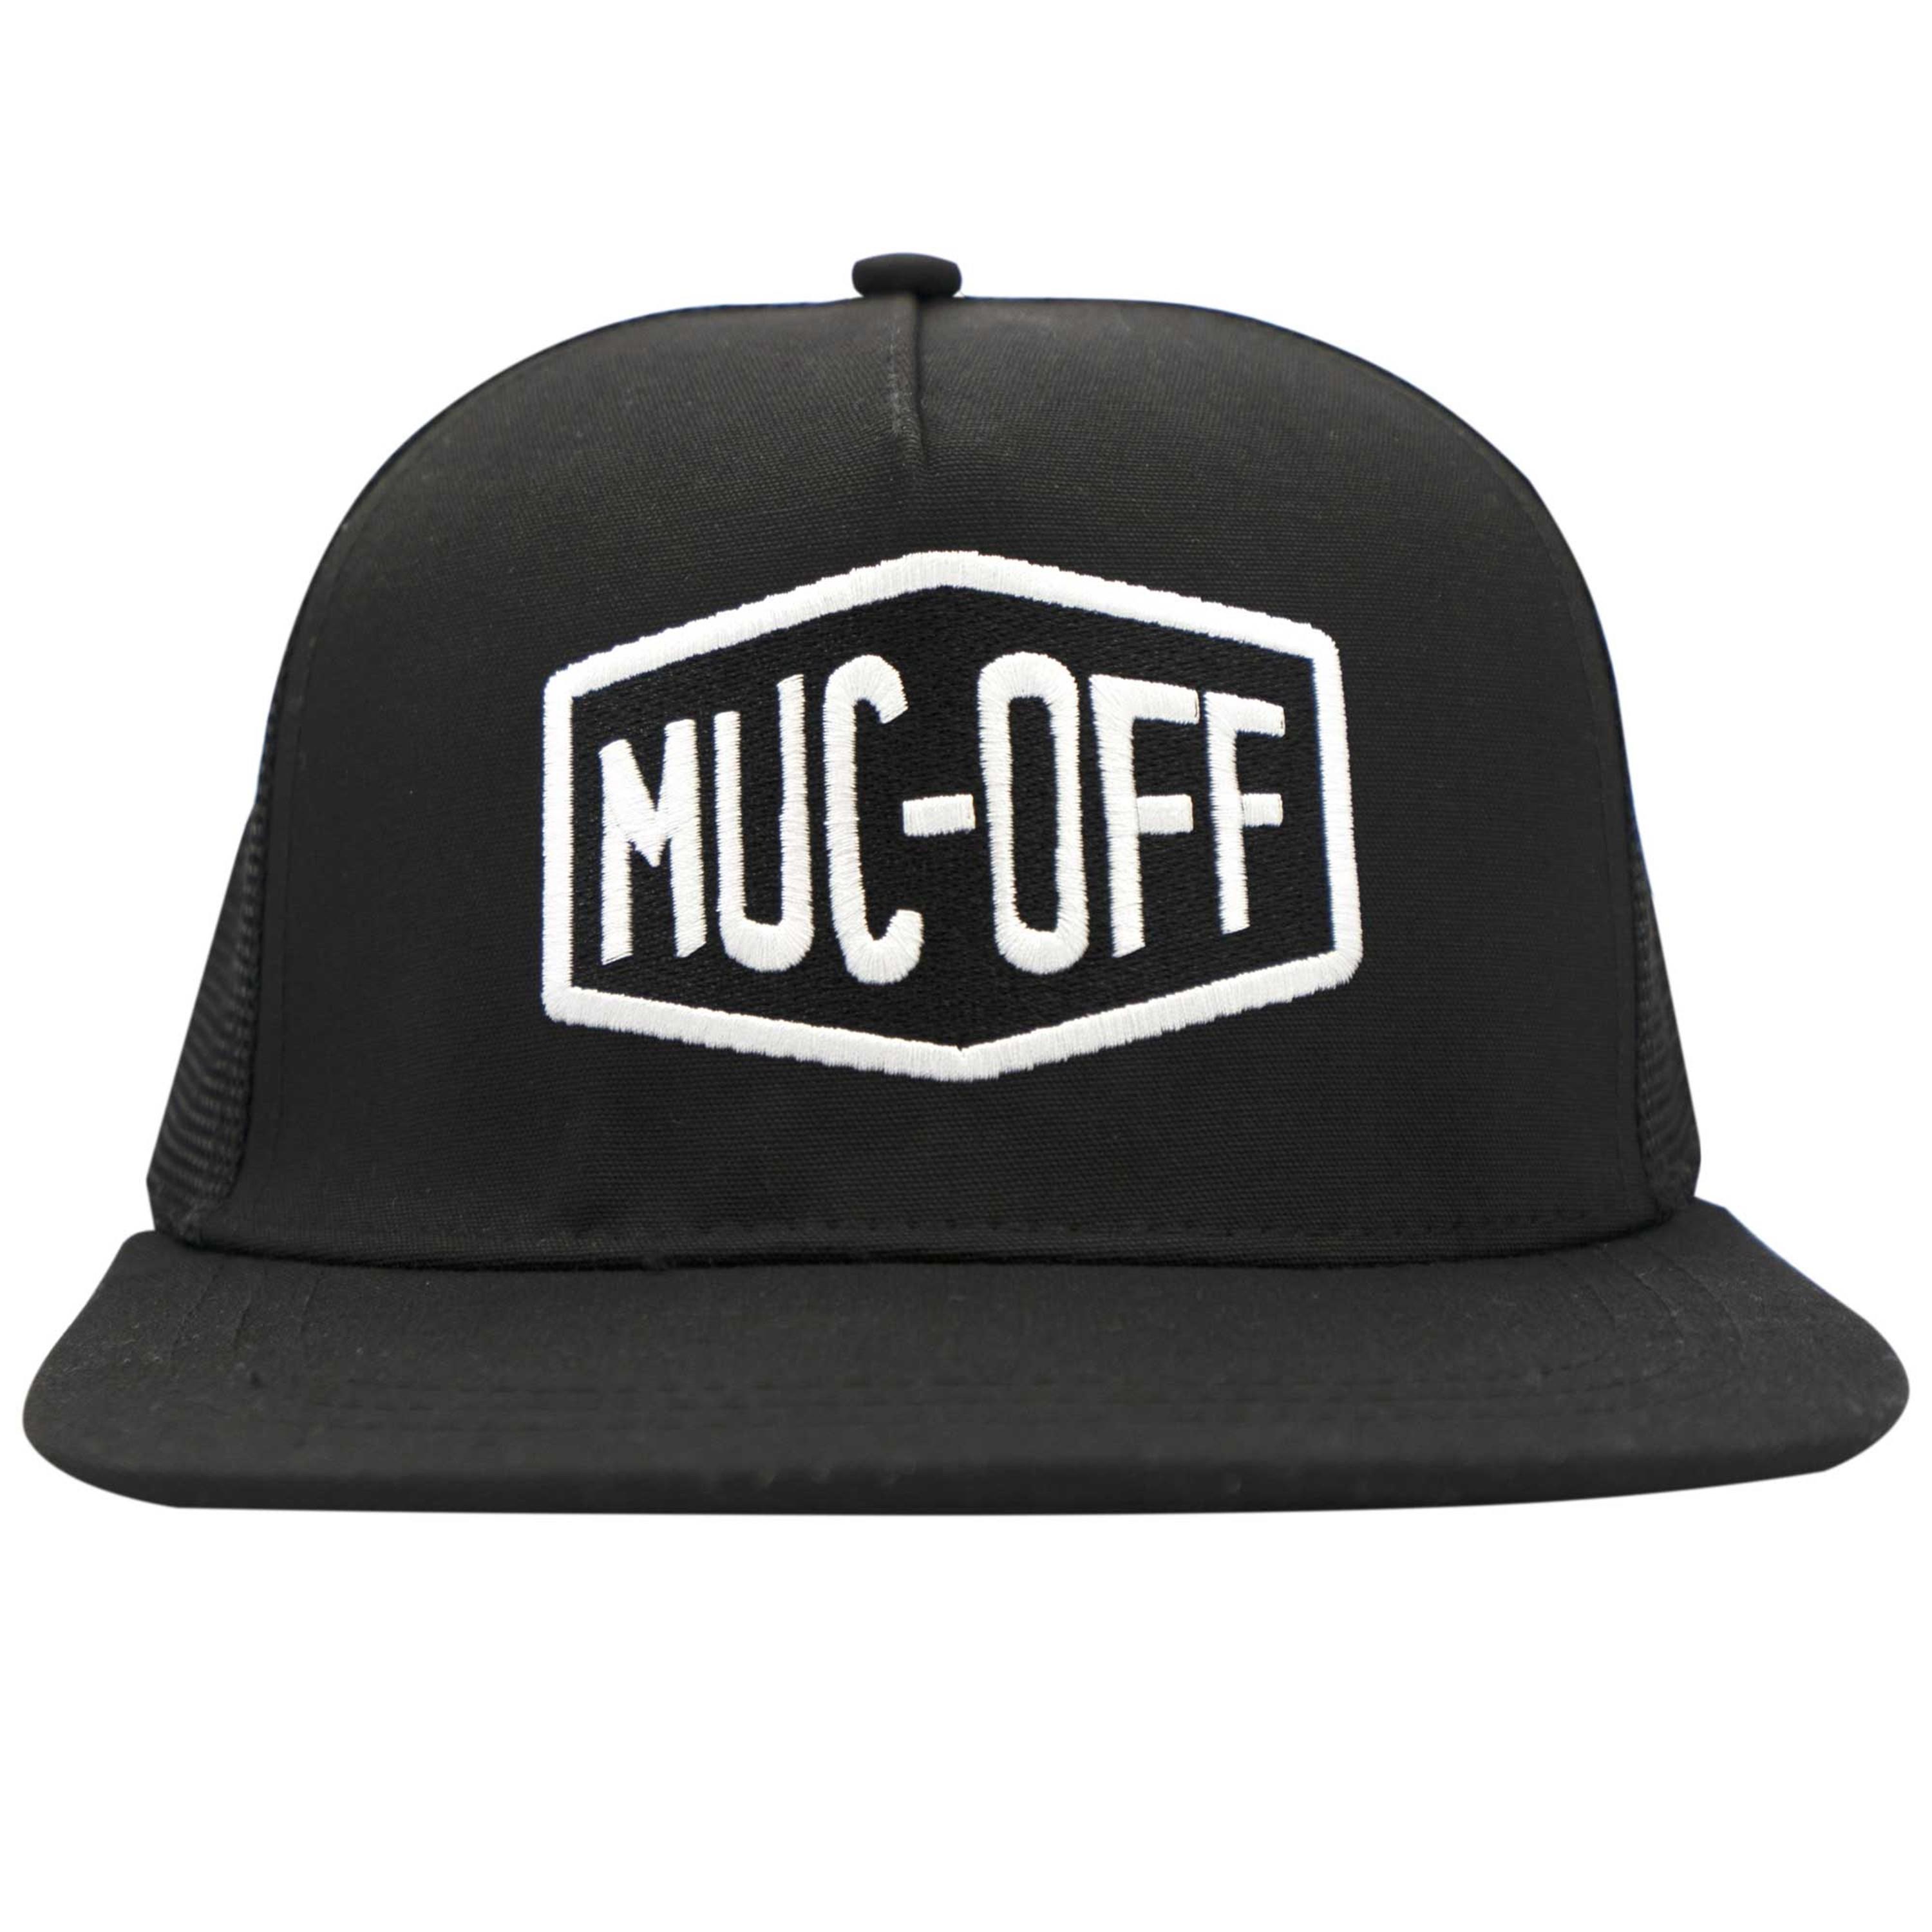 Muc-Off Trucker Cap